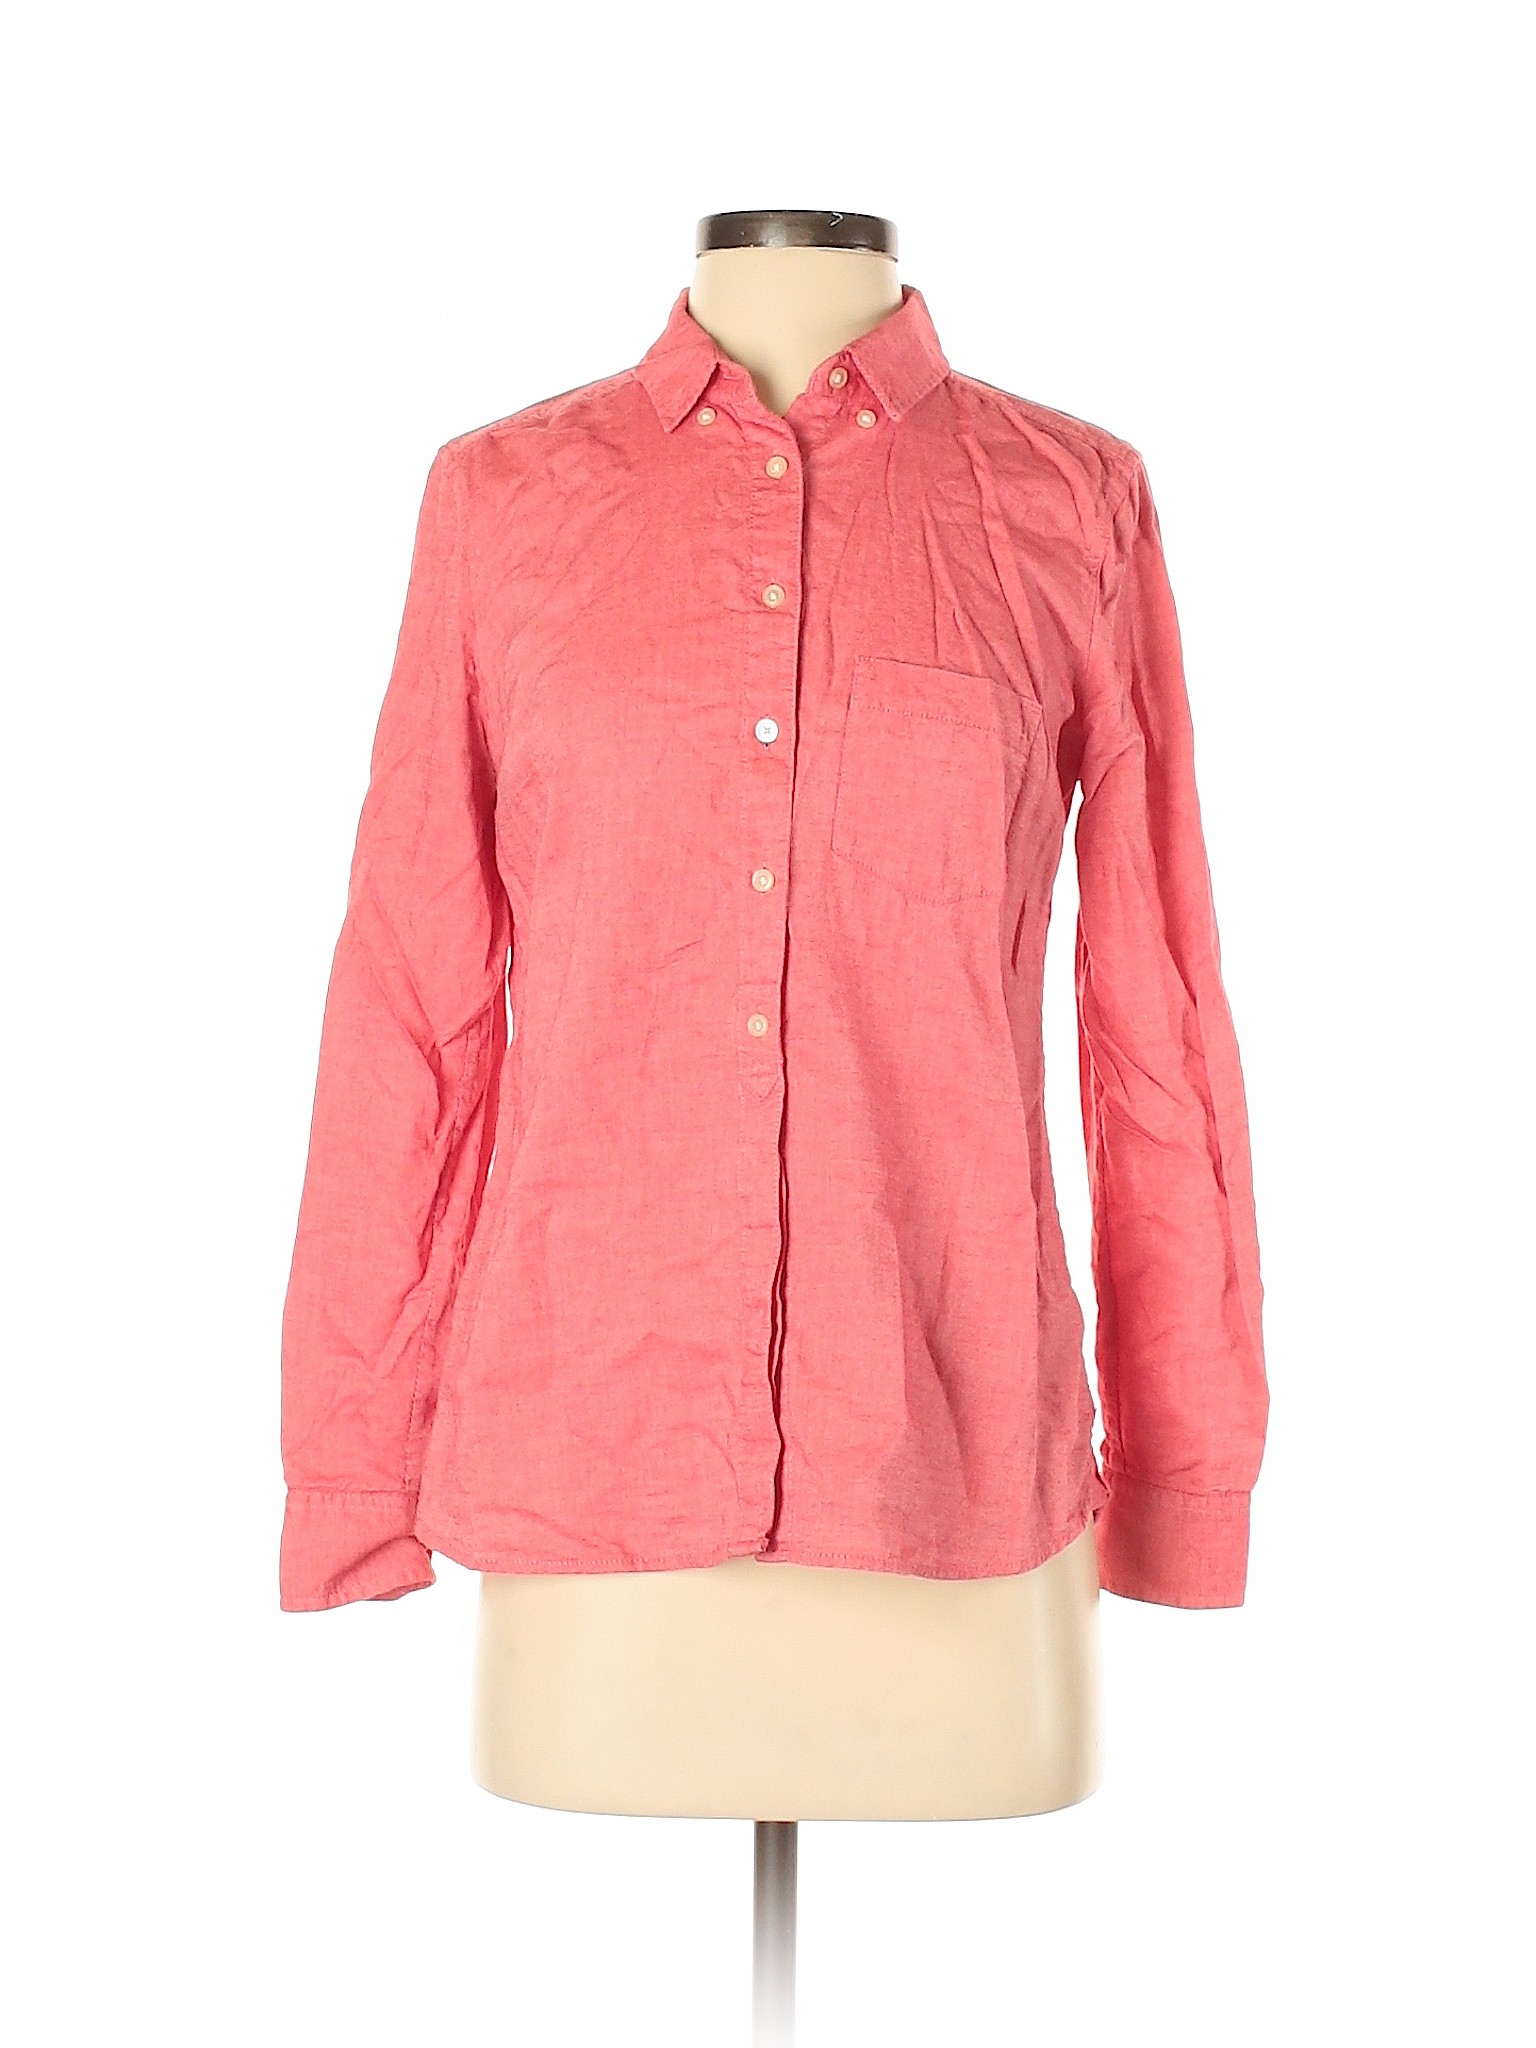 Gap Women Pink Long Sleeve Button-Down Shirt S | eBay